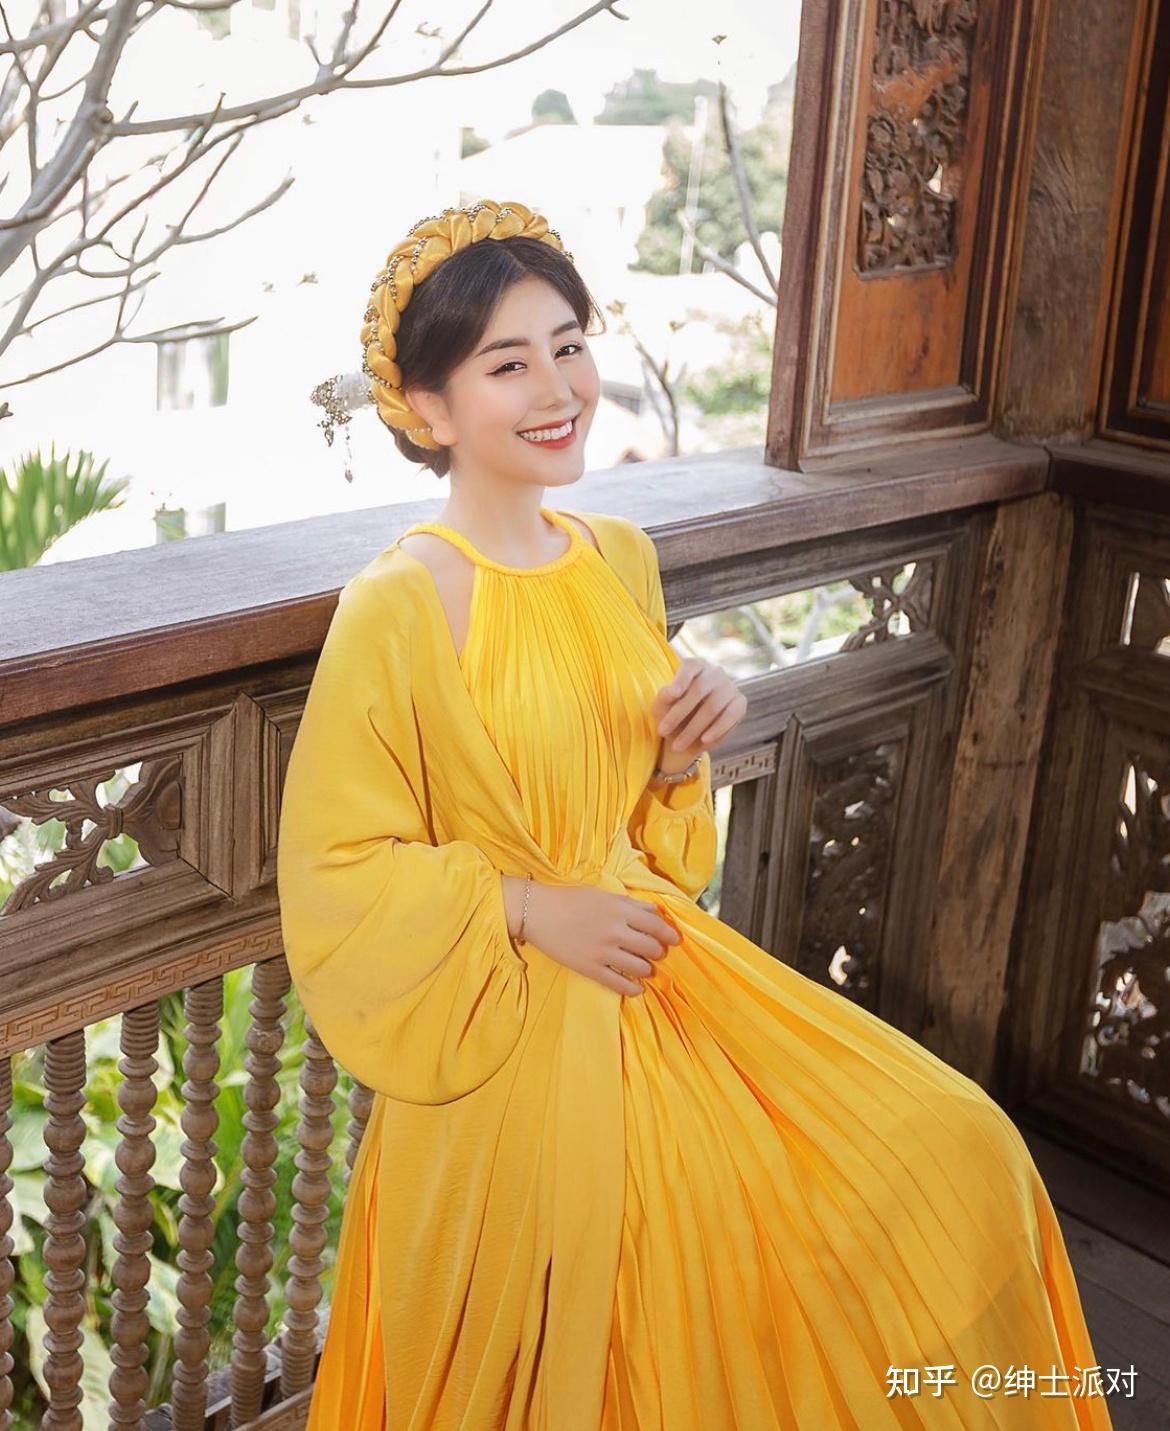 Cultural Blog: Vietnamese Traditional Costume - Ao Dai